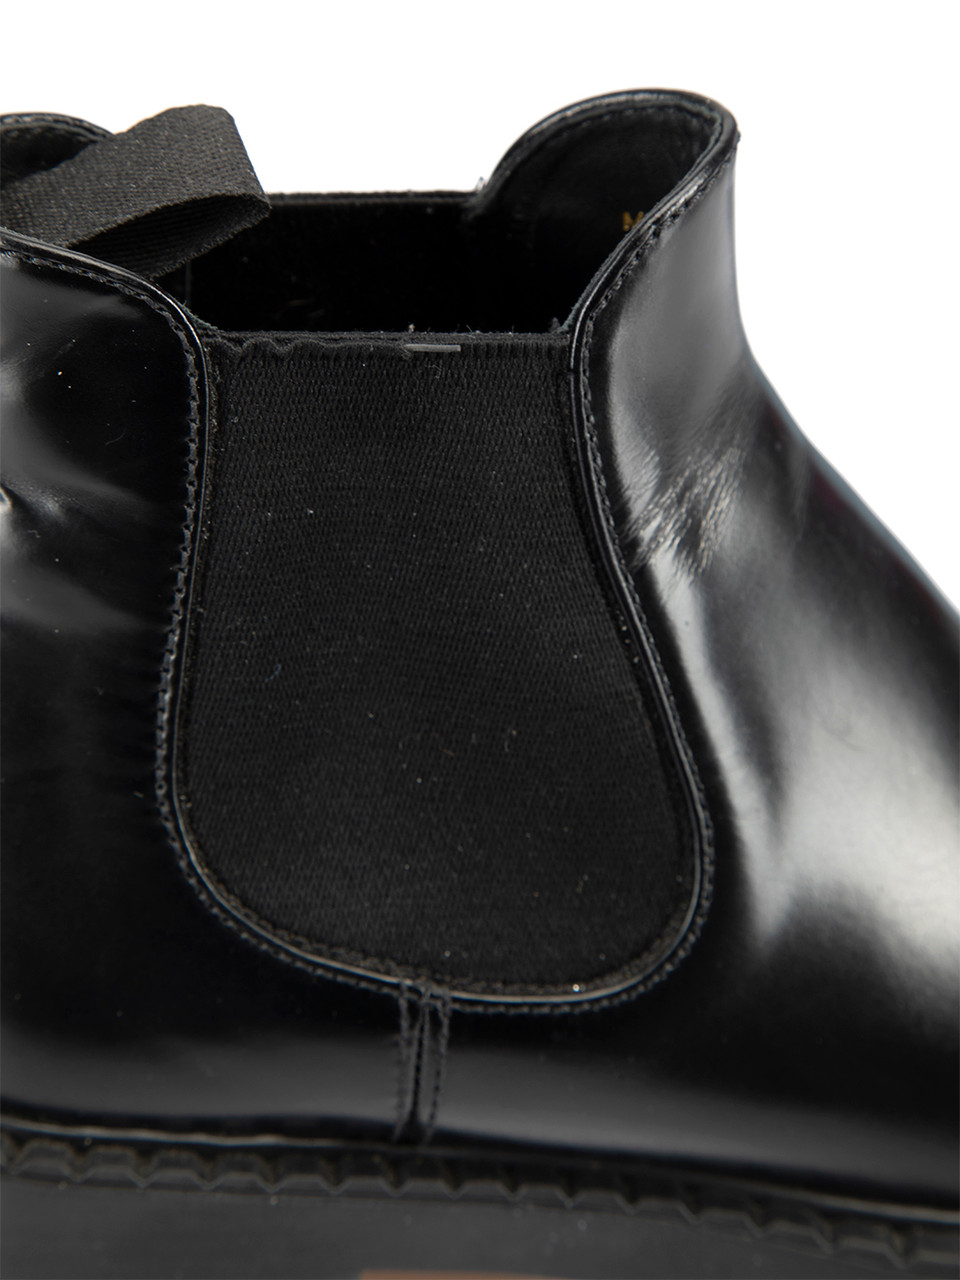 Prada Black Leather Round Toe Chelsea Boots